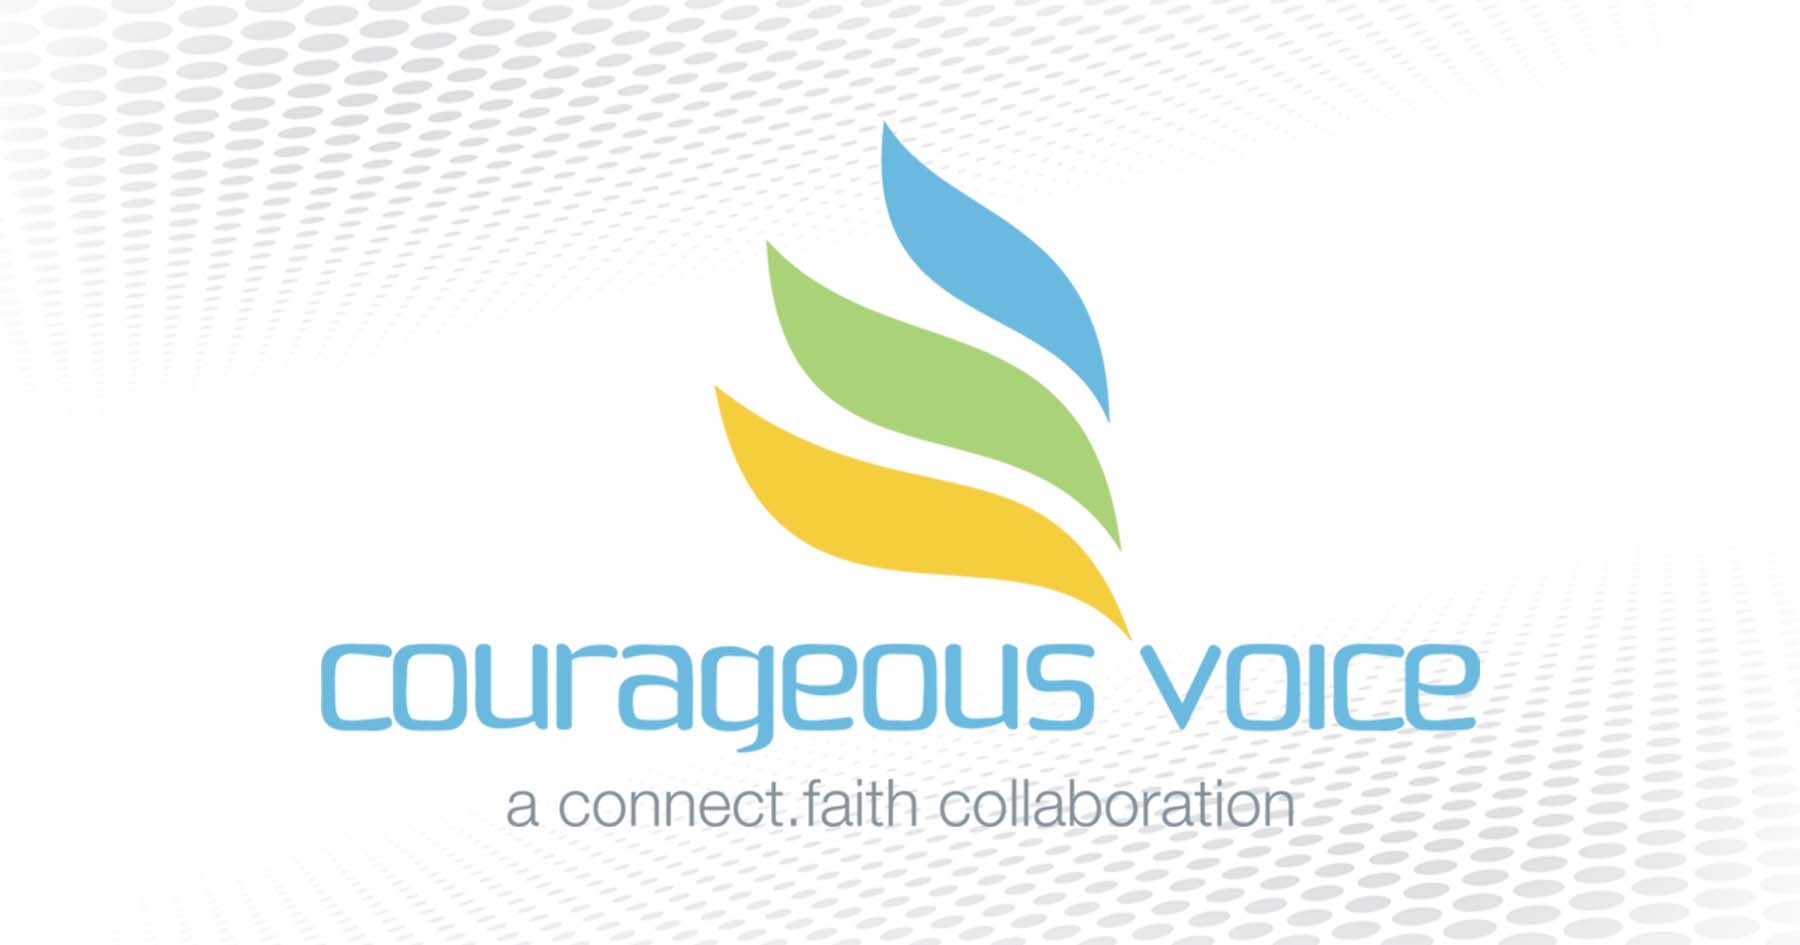 Debbie Bronkema | “Courageous Voice” | connect.faith